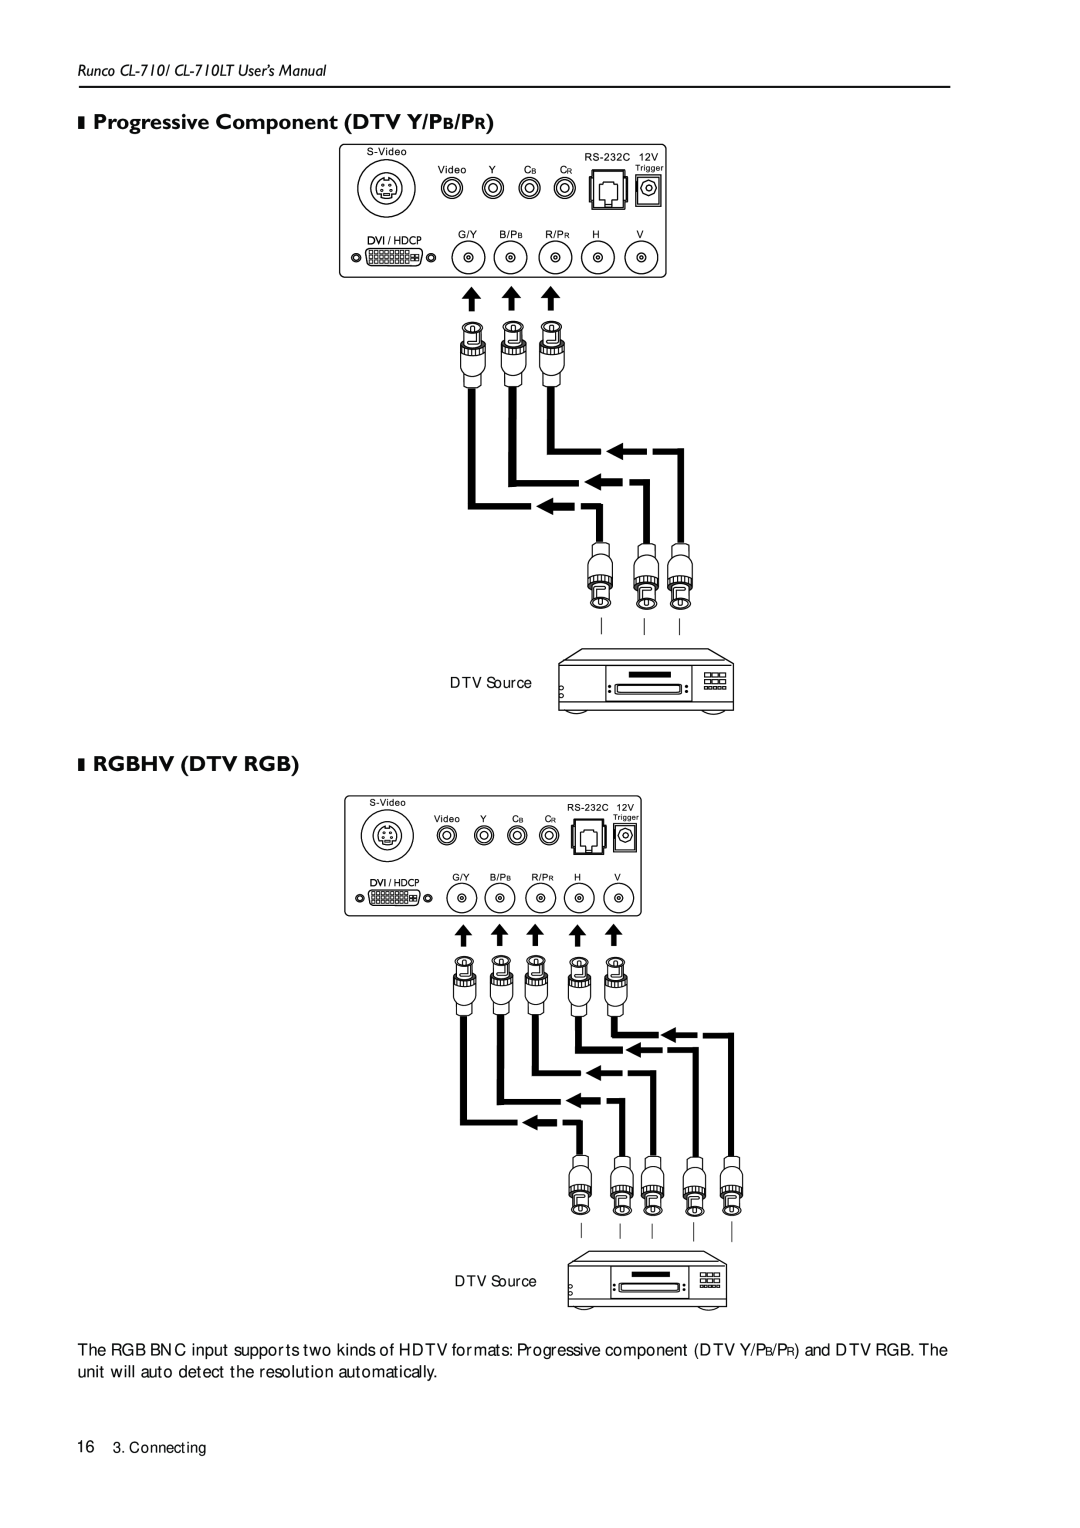 Runco CL-710LT manual Progressive Component DTV Y/PB/PR, Rgbhv Dtv Rgb, DTV Source, Connecting 